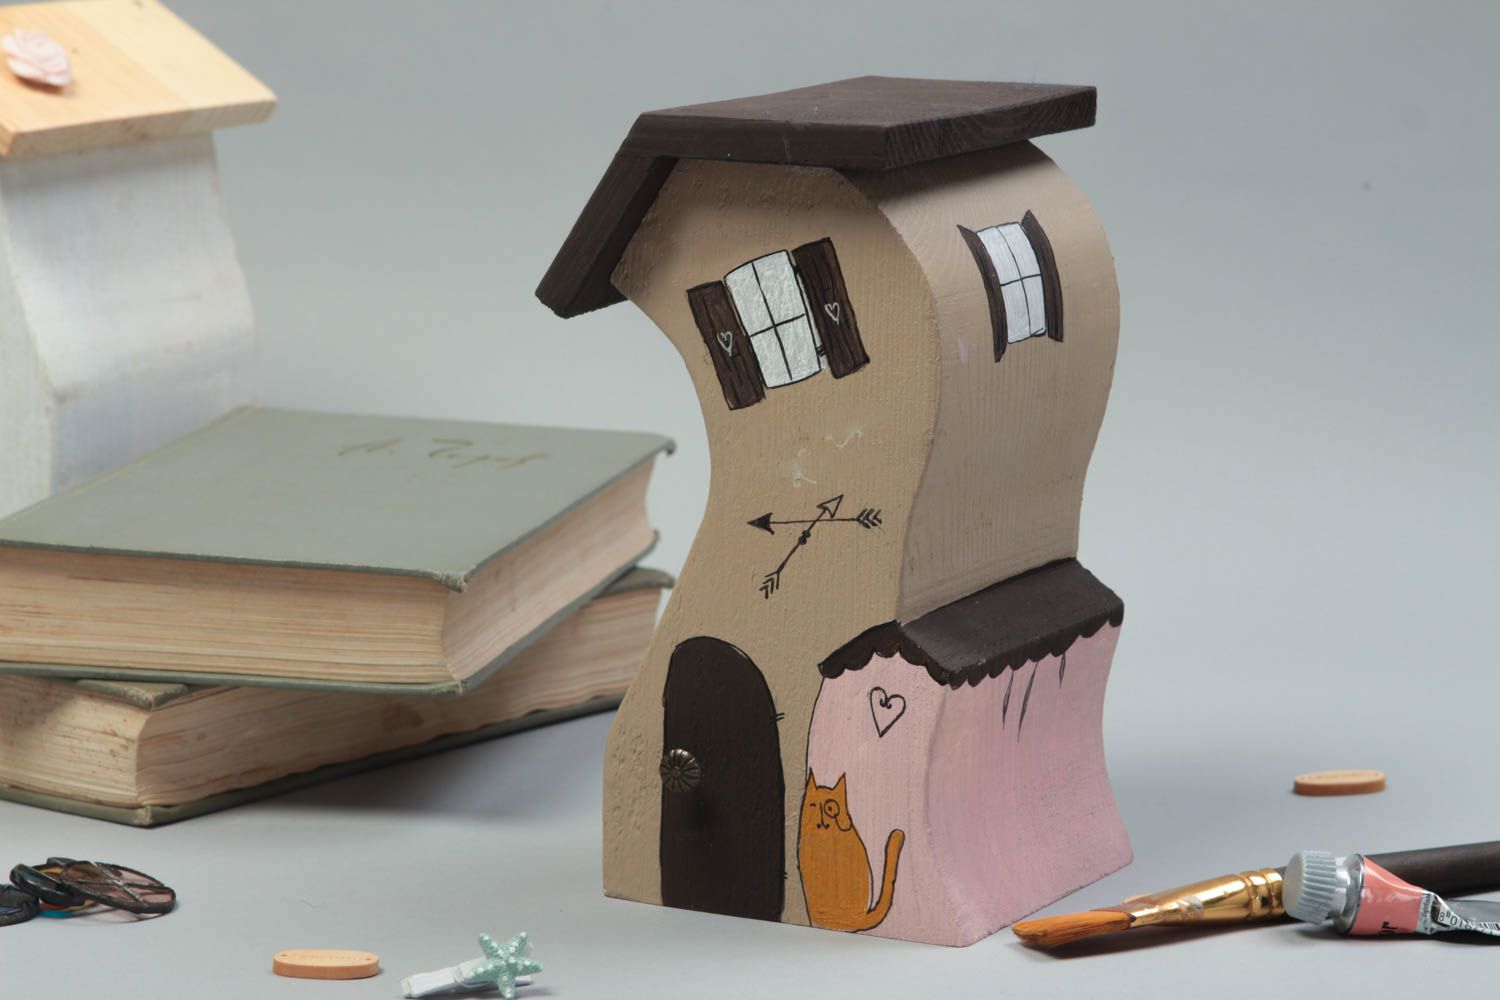 Handmade wooden toy collectible figurines shelf decor housewarming gift ideas photo 1